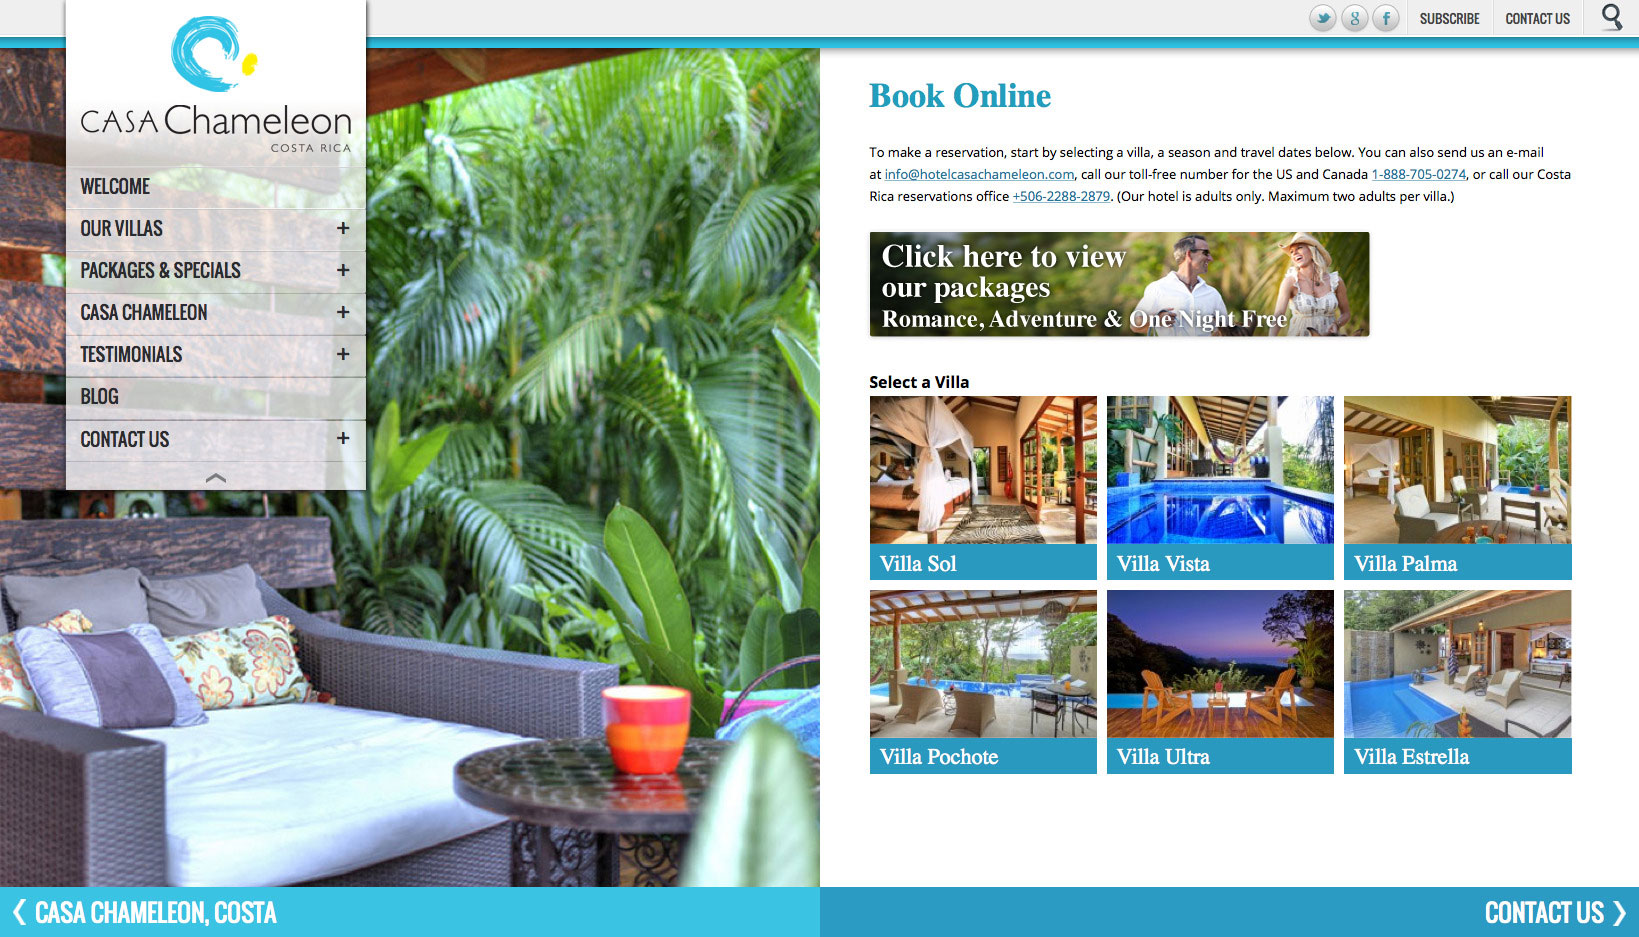 Book-Online-Costa-Rica-Hotel-_-Casa-Chameleon5.jpg